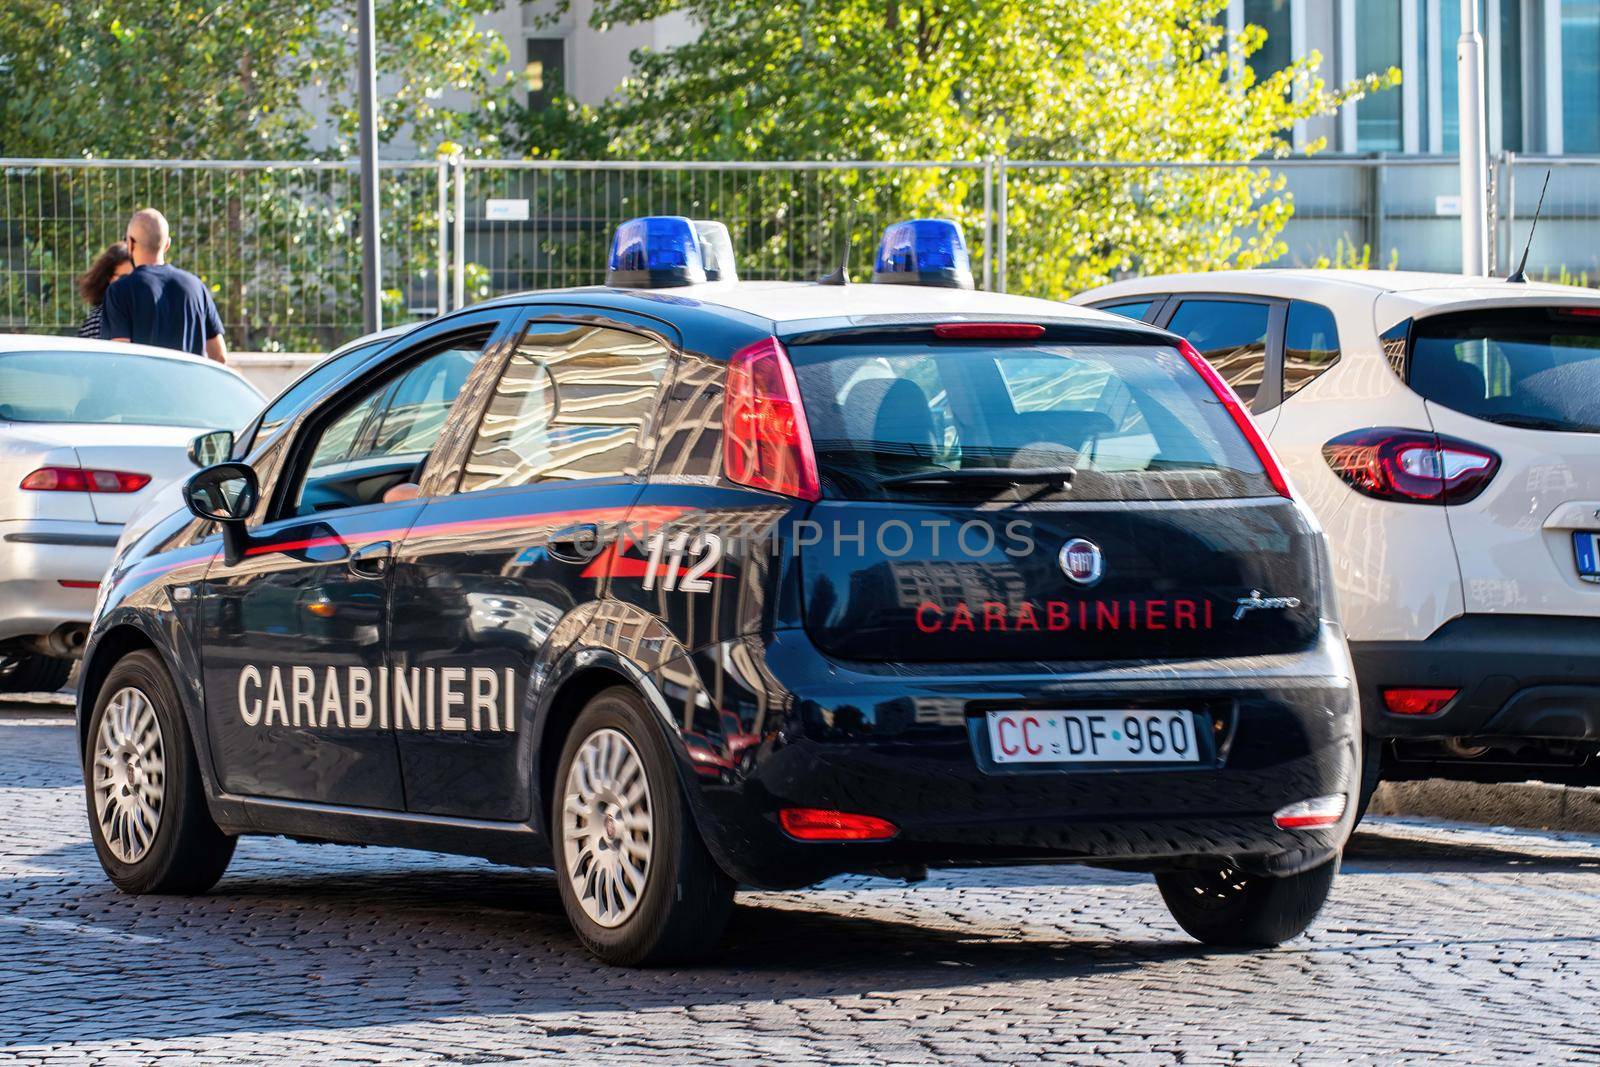 carabinieri car that runs along a street in the city center by carfedeph